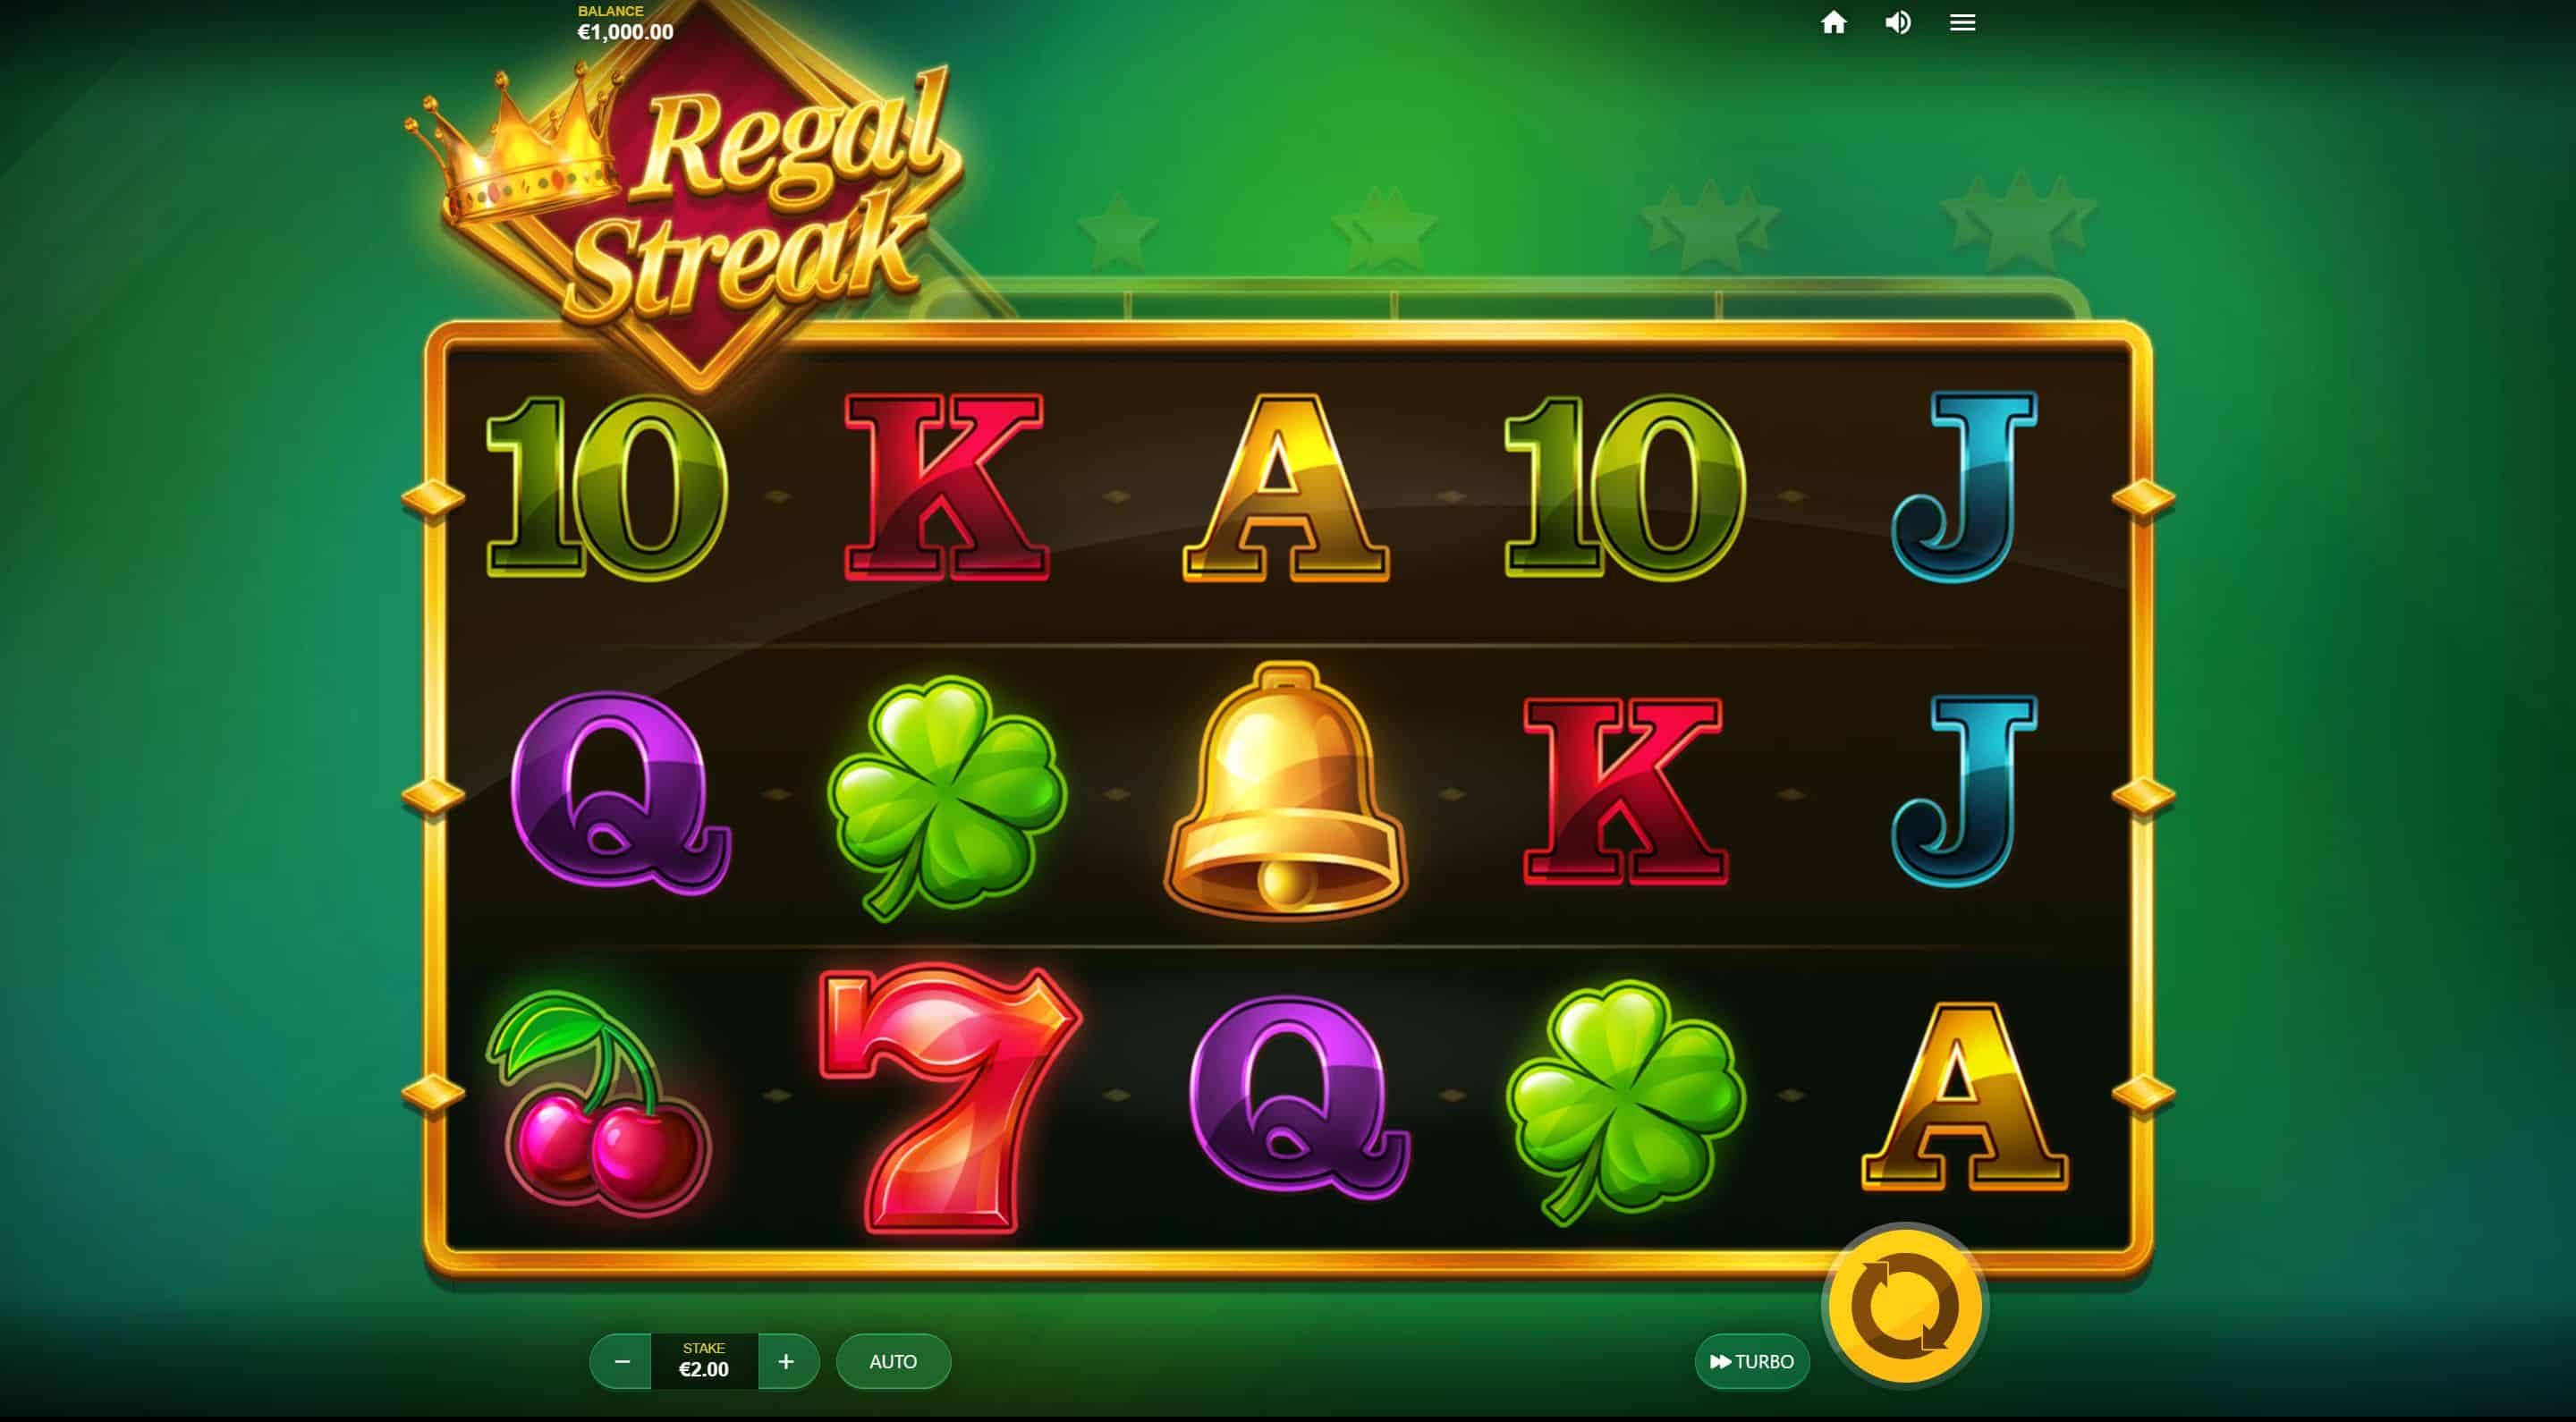 Regal Streak Slot Game Free Play at Casino Mauritius